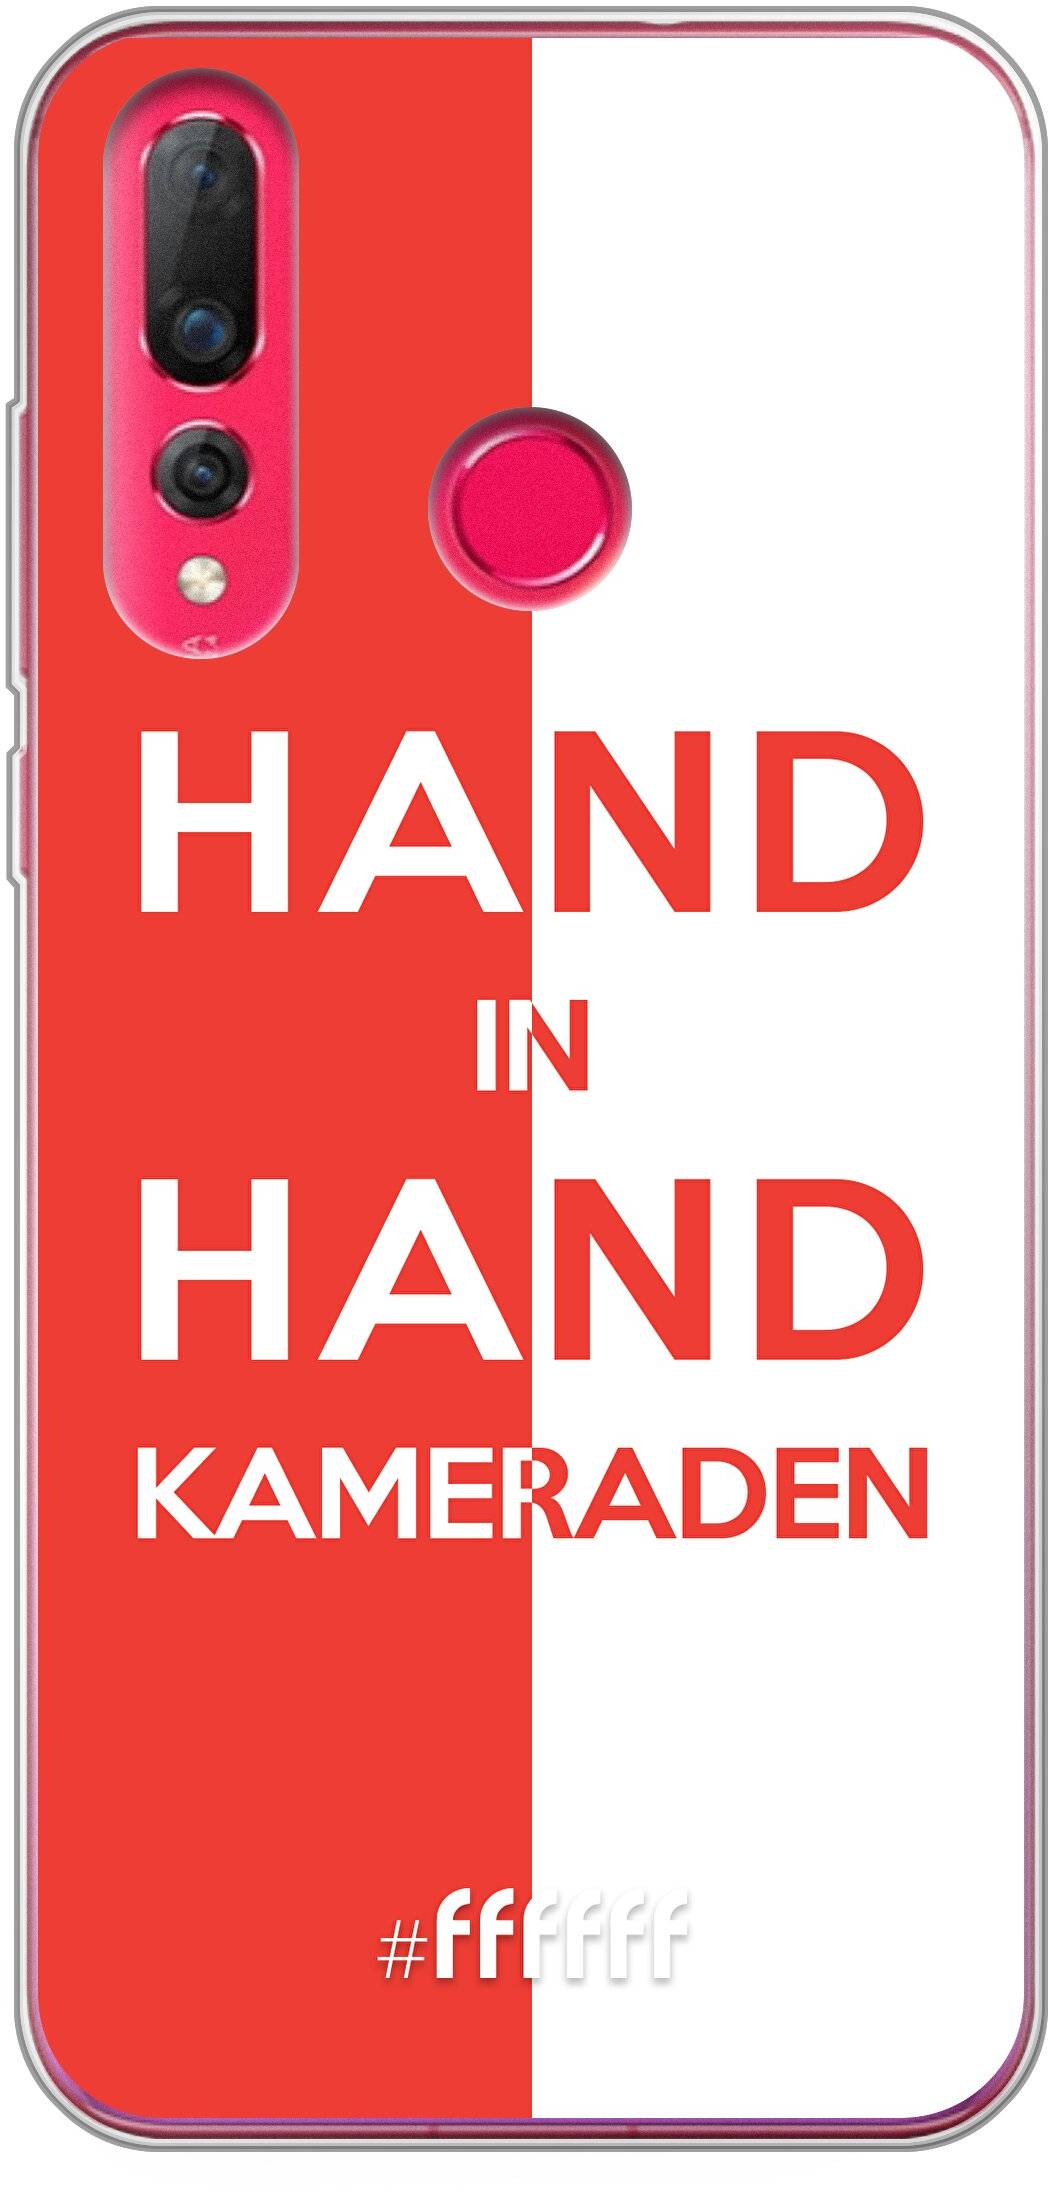 Feyenoord - Hand in hand, kameraden P30 Lite